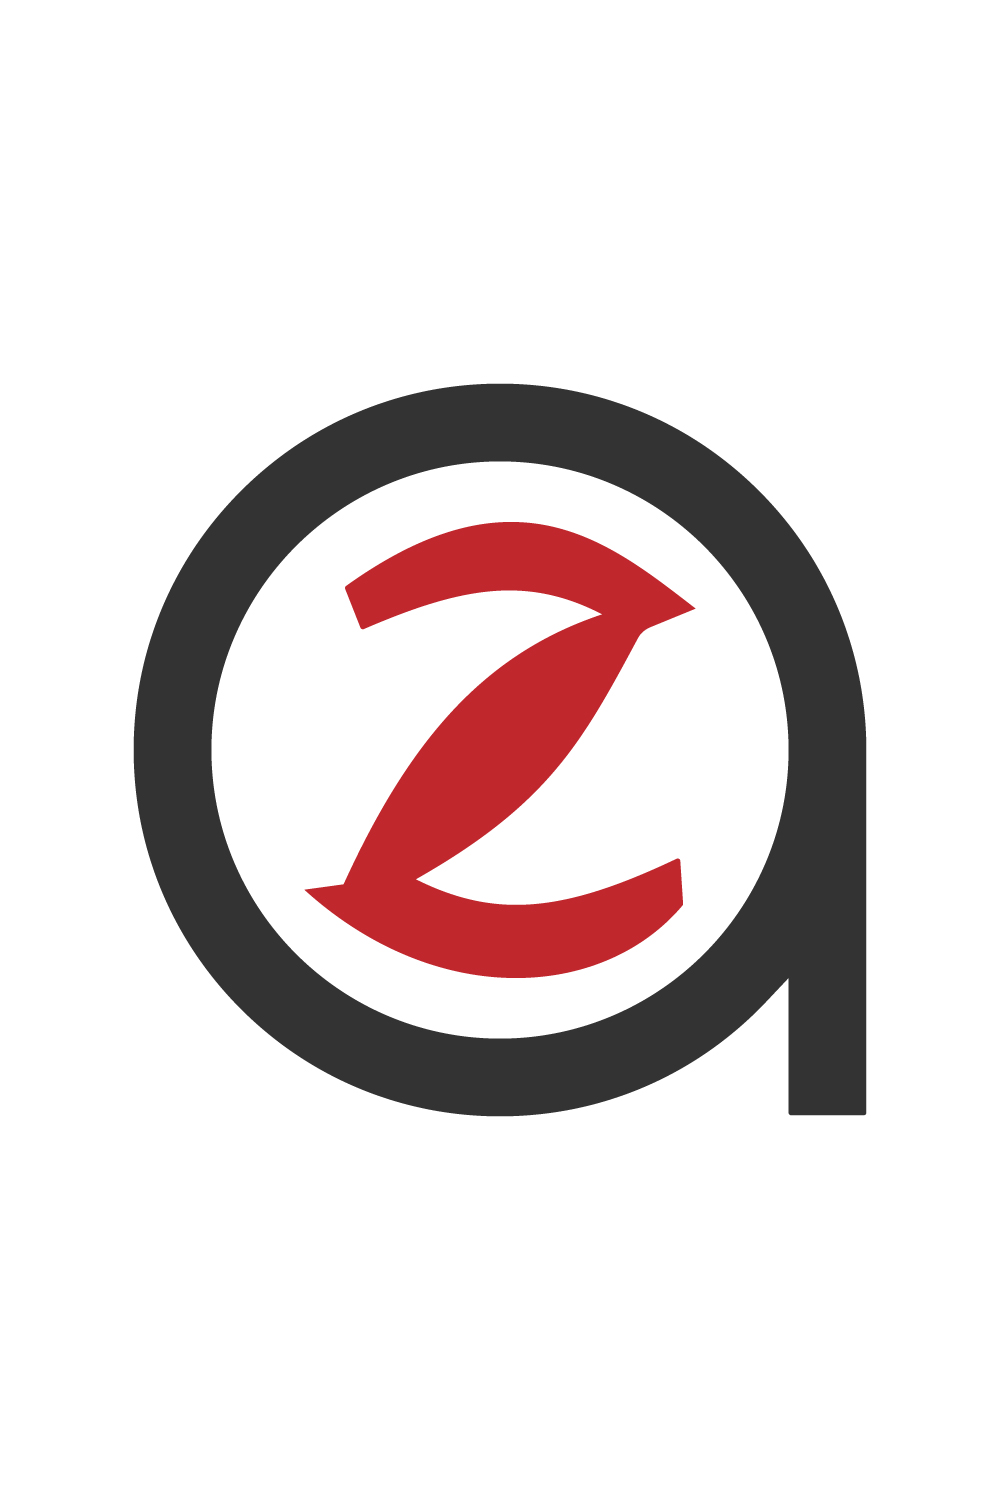 Initials QZ letters logo design vector icon ZQ logo design red and black color images QZ logo template icon Premium vector illustration pinterest preview image.